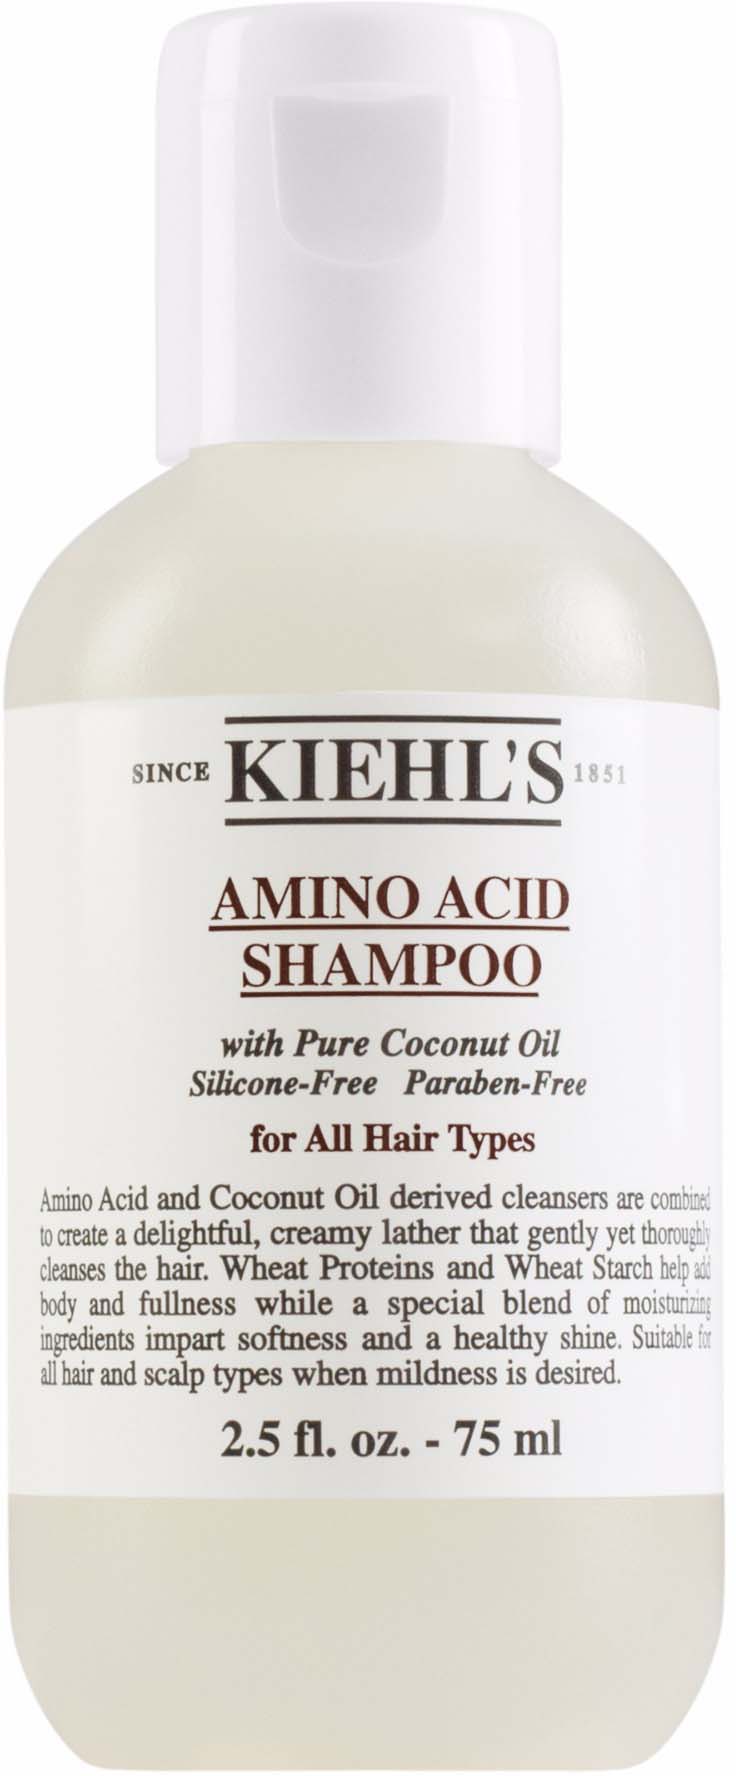 Kiehl's Amino Acid Hair Care Shampoo 75 ml 